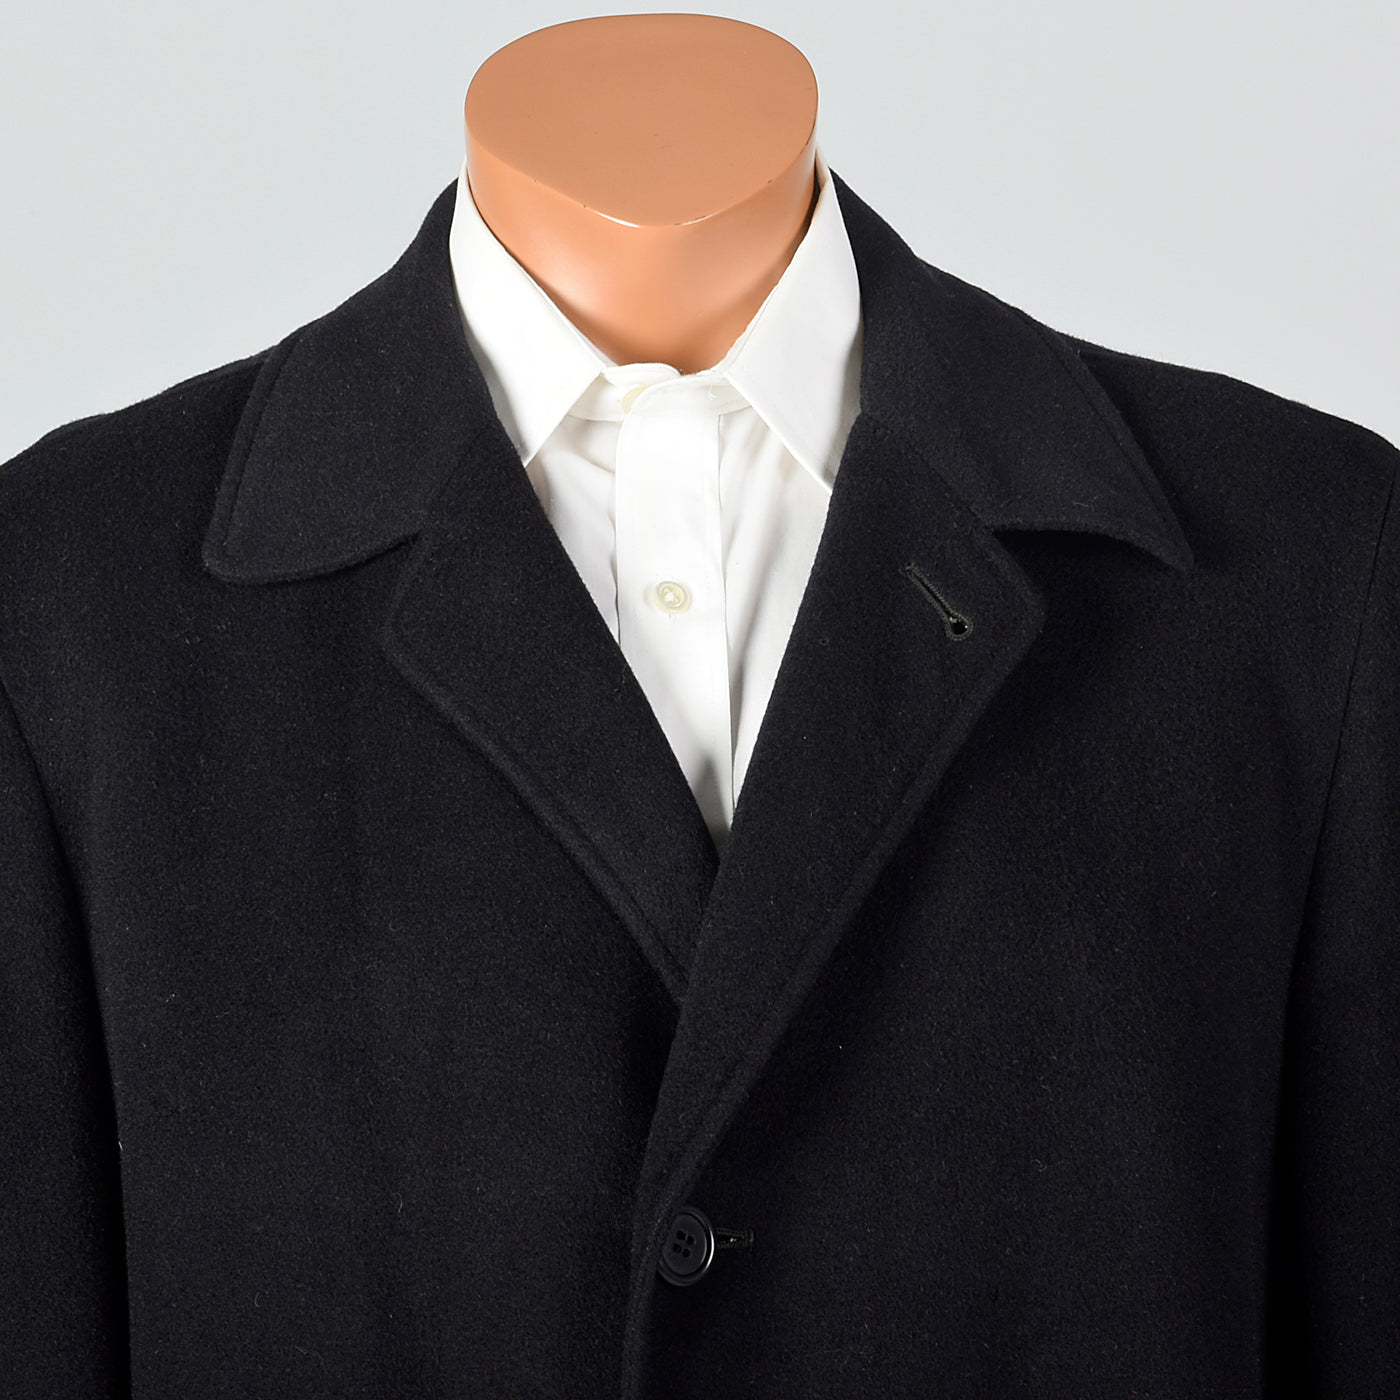 1950s Mens Black Cashmere Coat